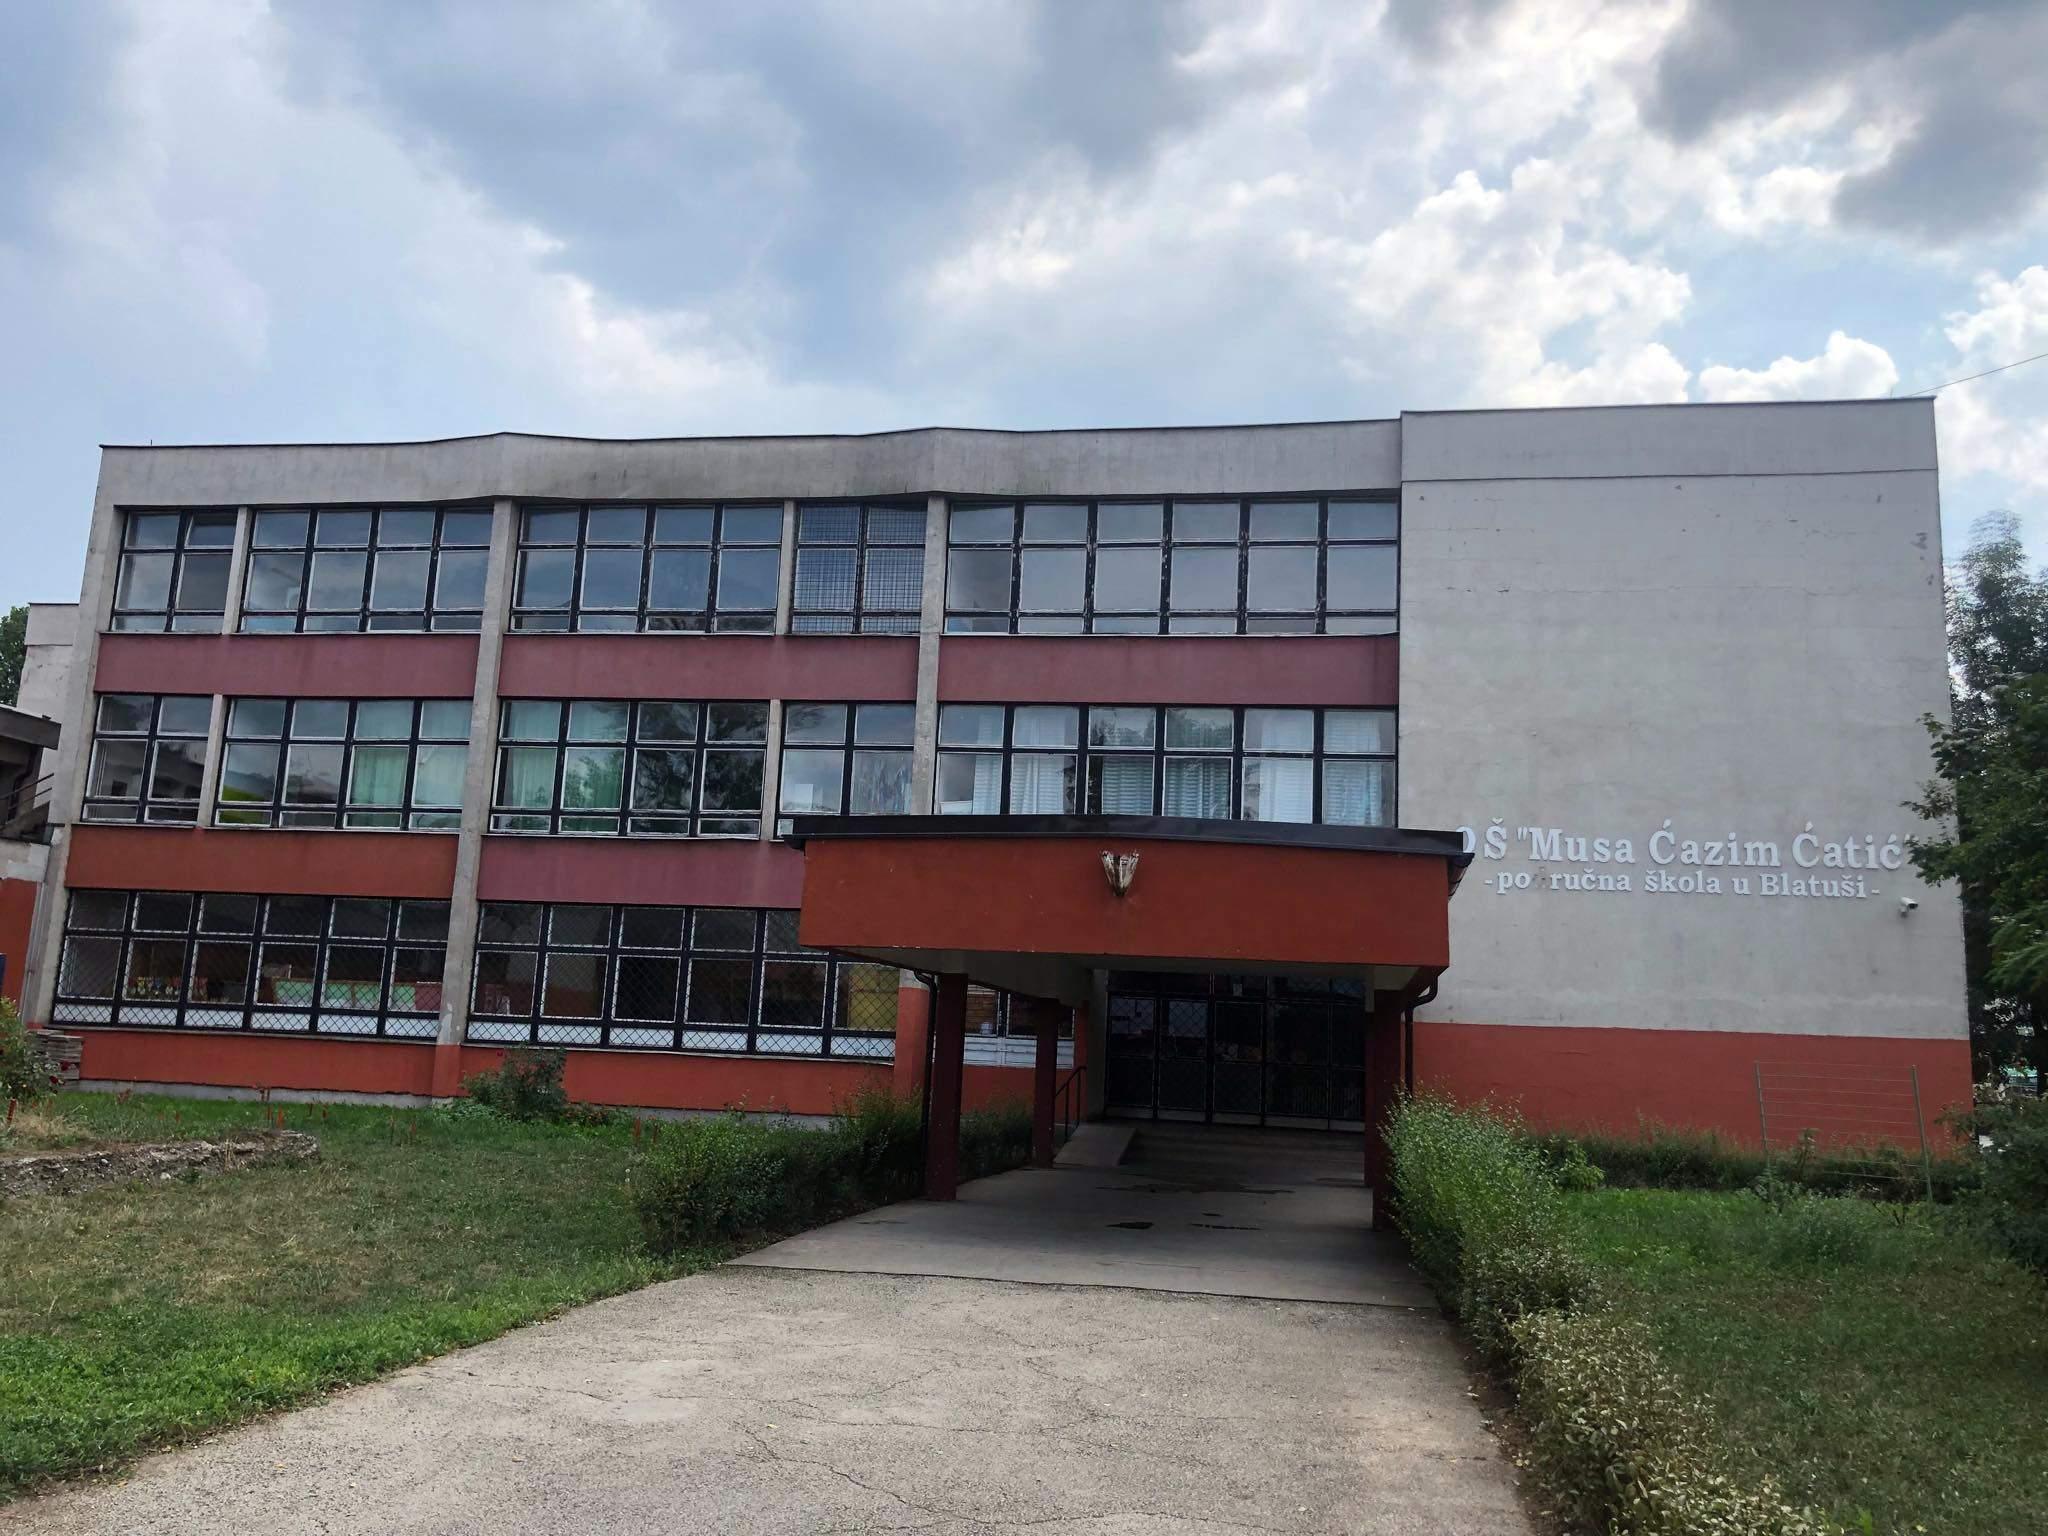 Škola "Musa Ćazim Ćatić" u Zenici - Avaz